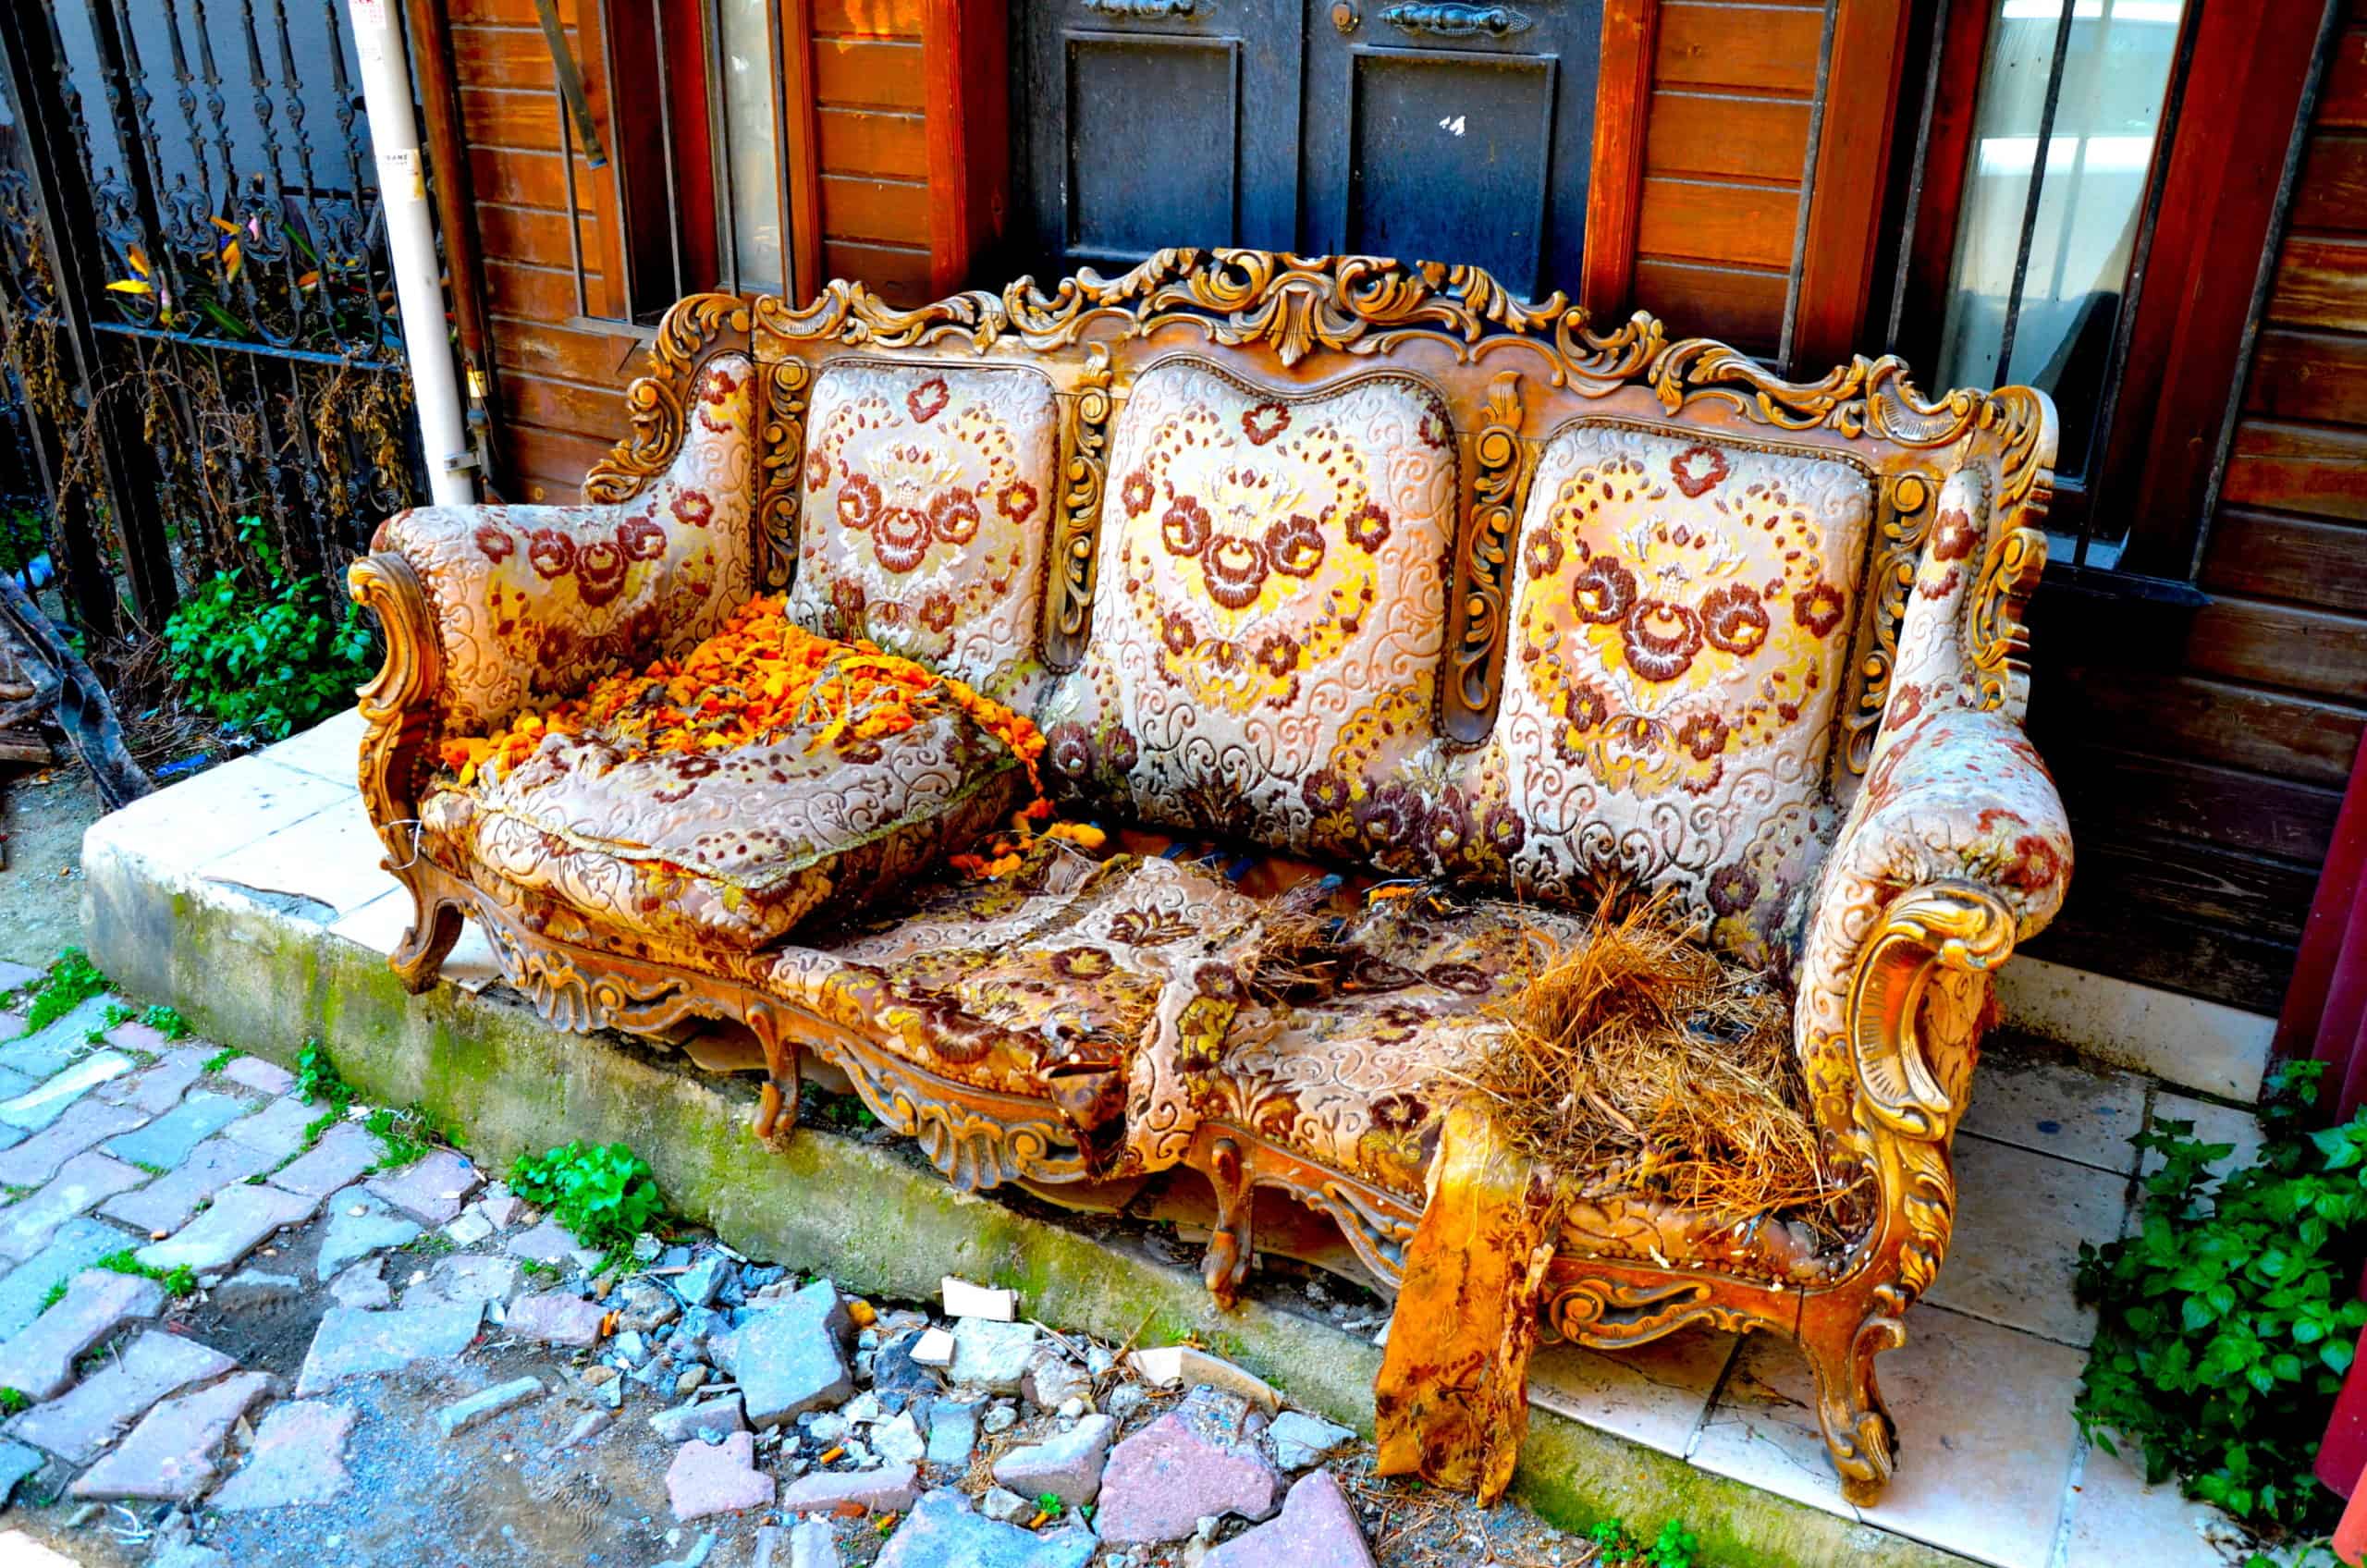 Antique couch on the street in Çukurcuma, Istanbul, Turkey